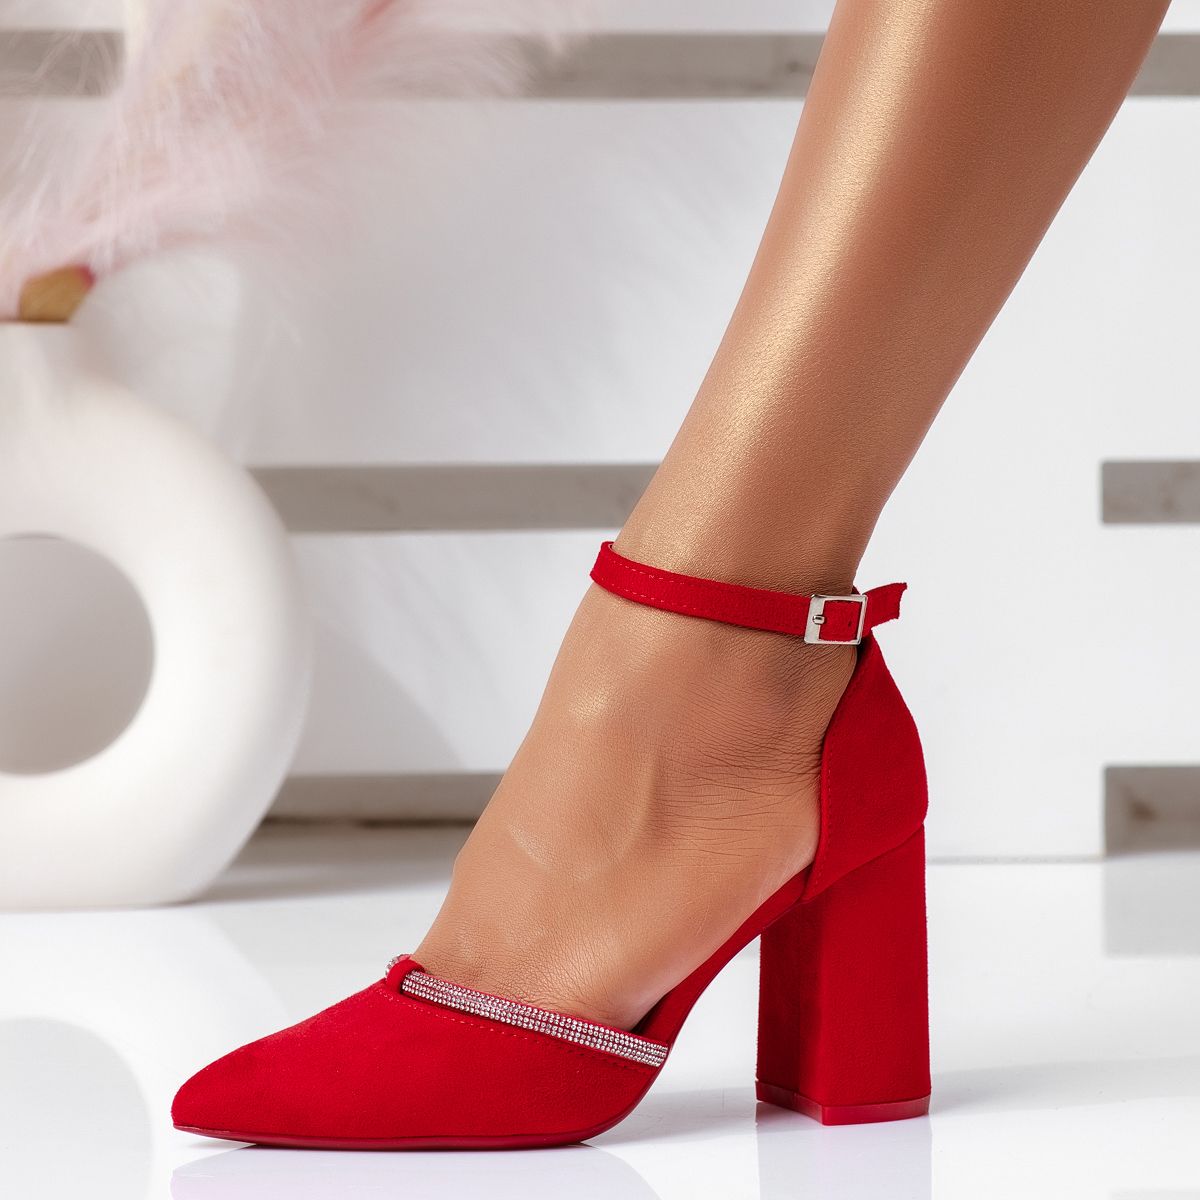 Pantofi Dama cu Toc Karina Rosii #13307